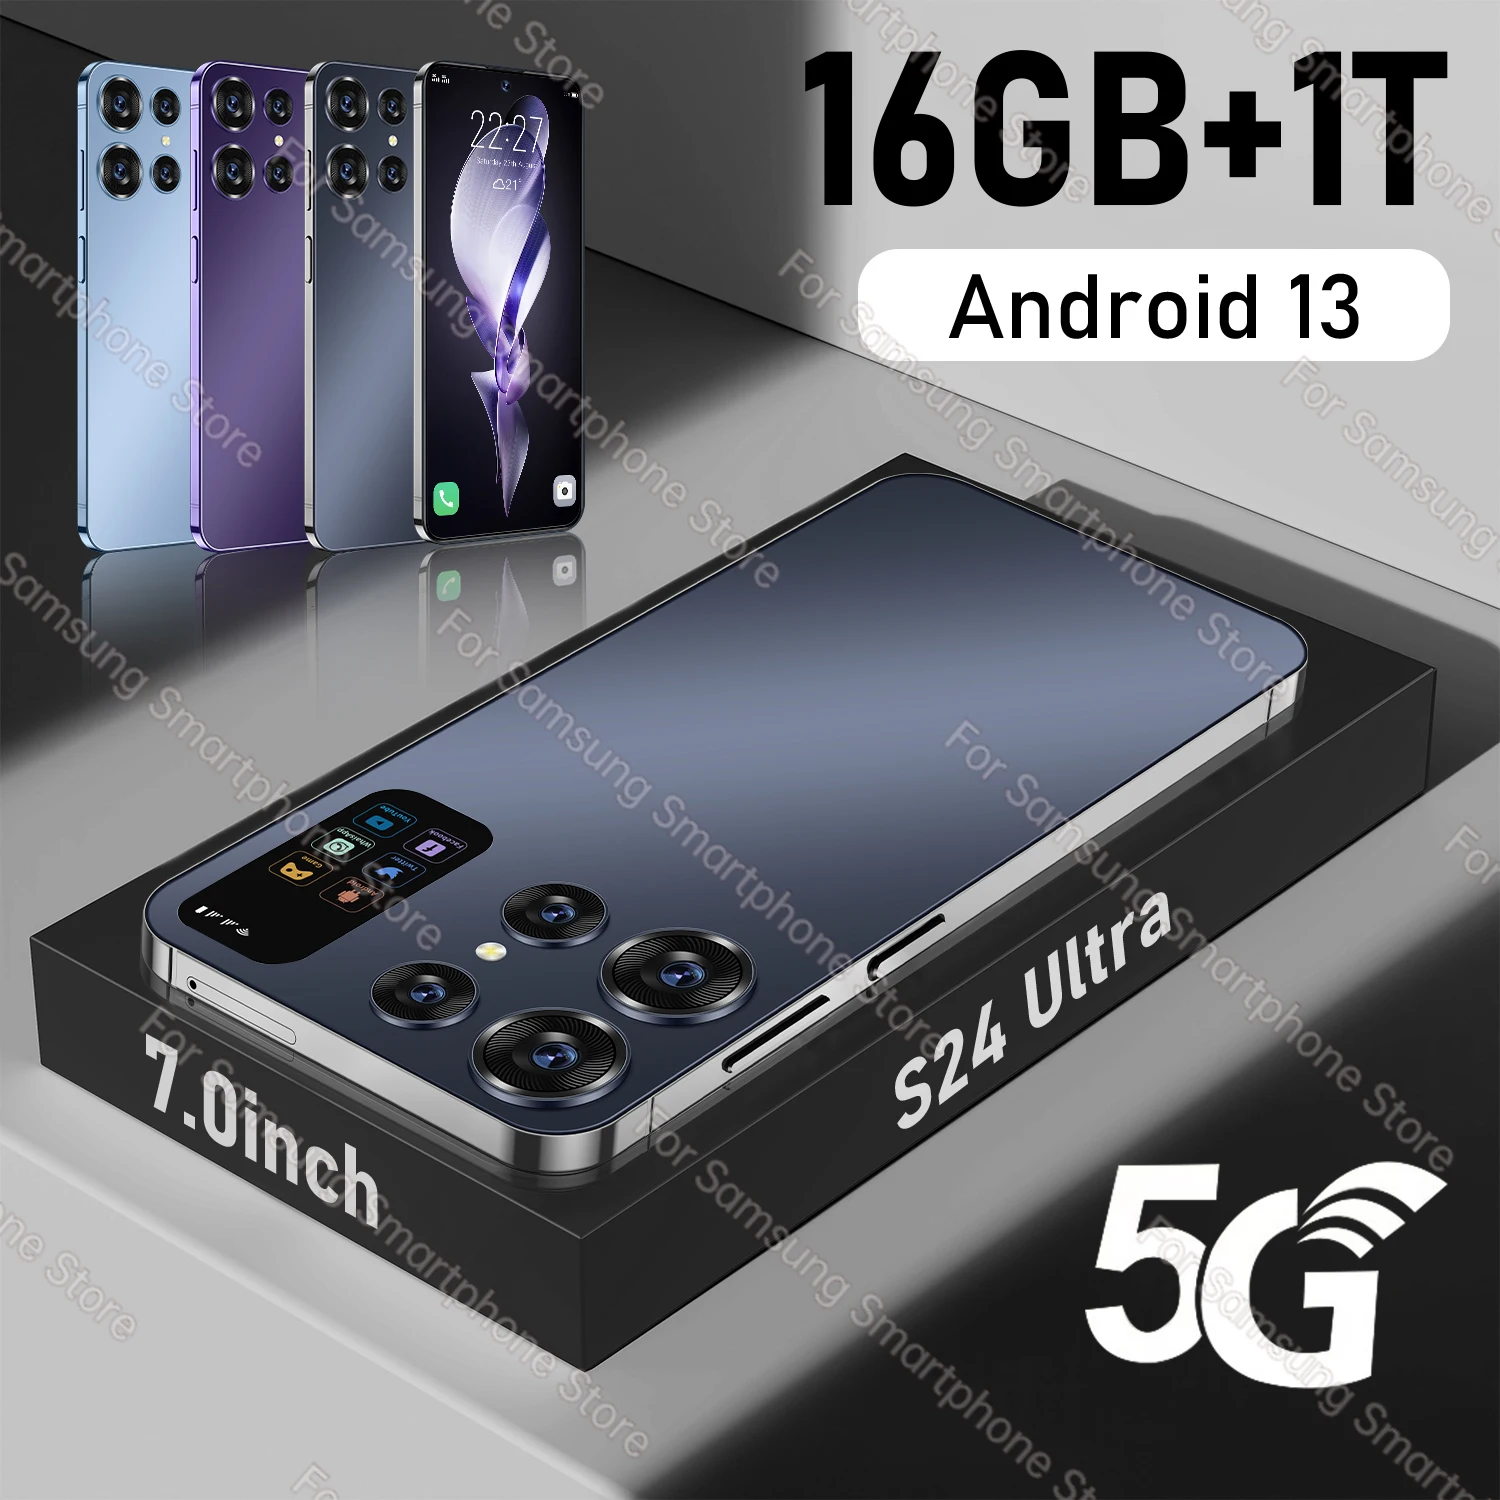 

Брендовый смартфон Global s24 s23 ultra 7.0HD, 16 ГБ + 1 ТБ, 7000 мАч, Android 13, Celulare, две Sim-карты